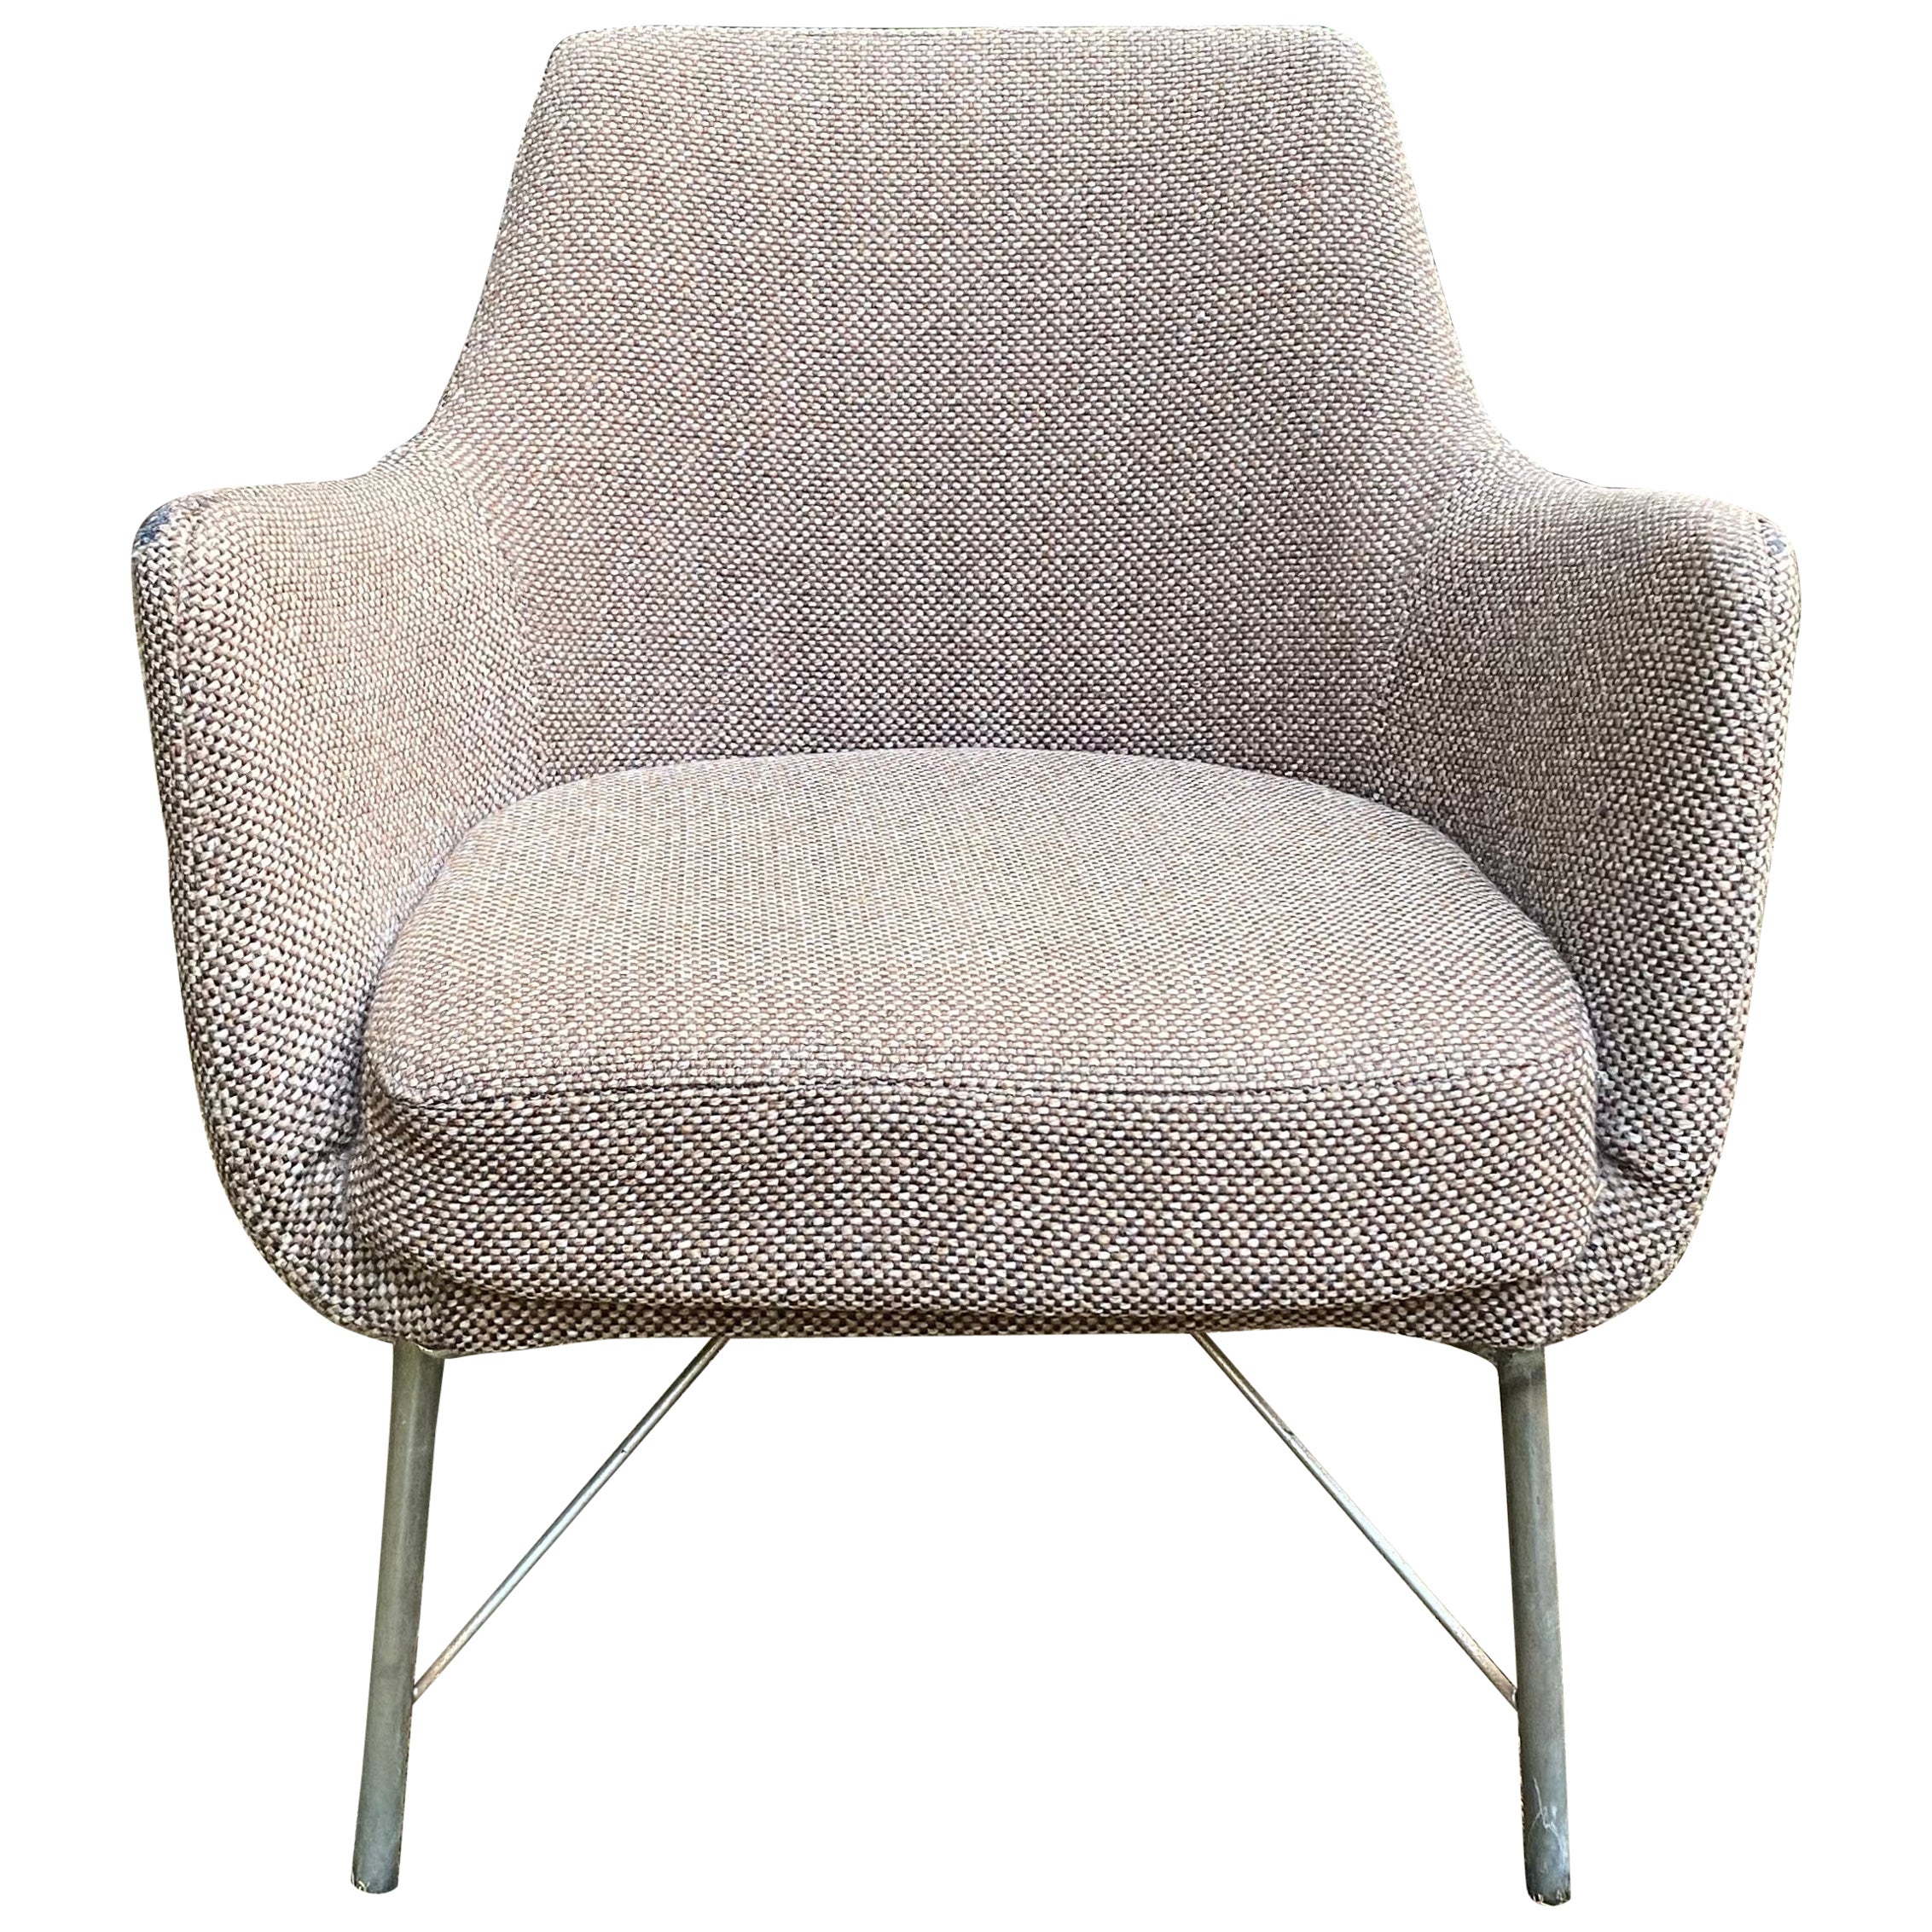 Mid-Century Lounge Chair by Karl Erik Ekselius for Pastoe, 1960s